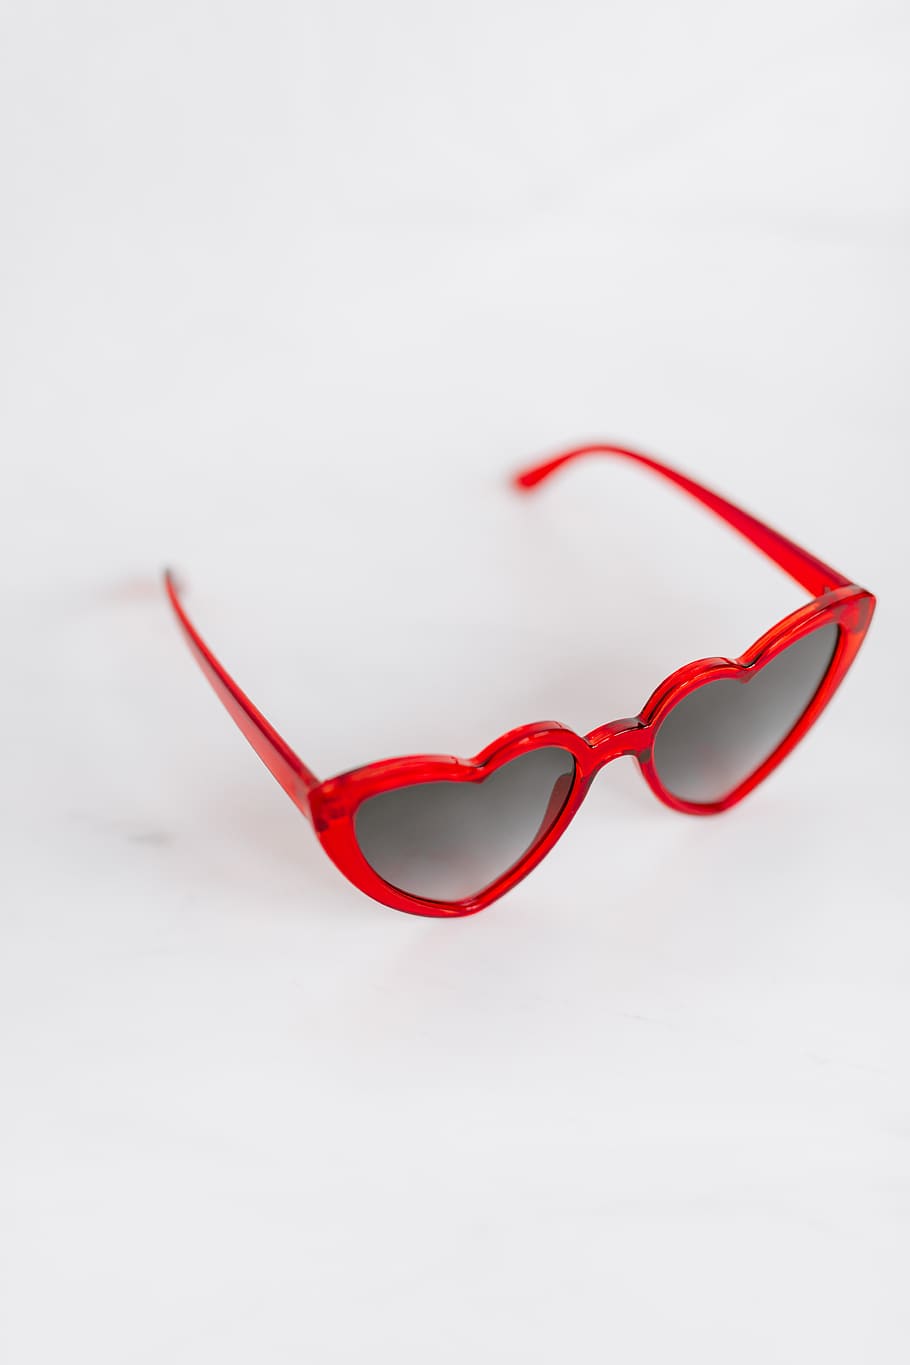 sunglasses, merah, kacamata, lucu, accesories, fashion, love, valentines, heart, shaped